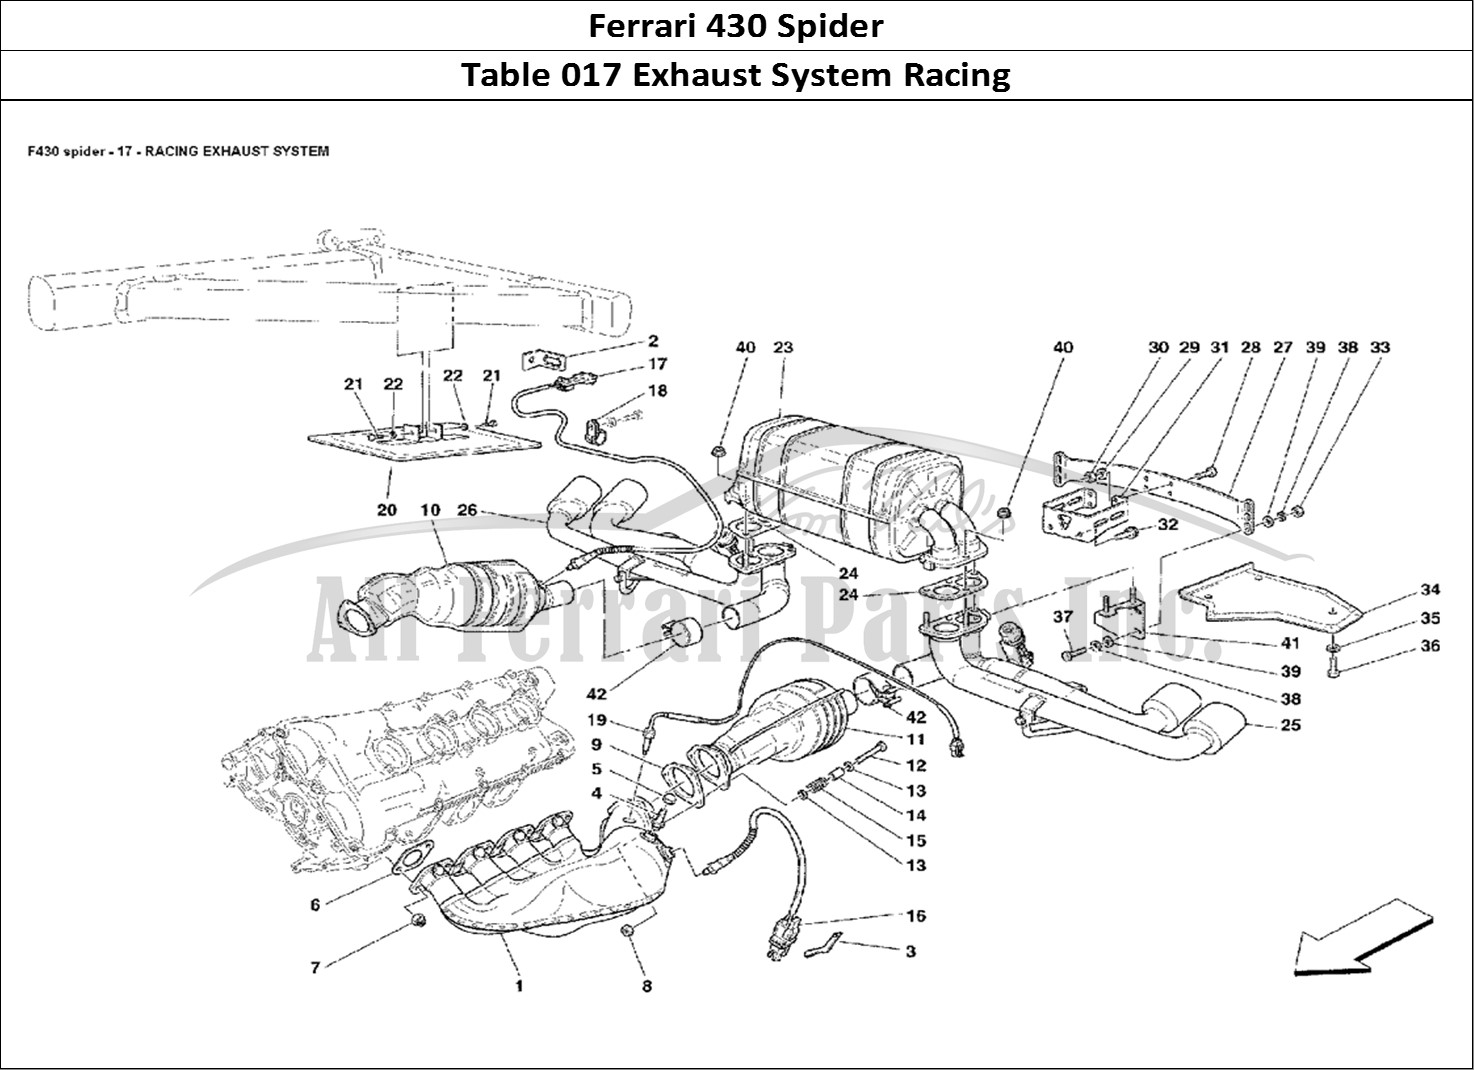 Ferrari Parts Ferrari 430 Spider Page 017 Racing Exhaust System